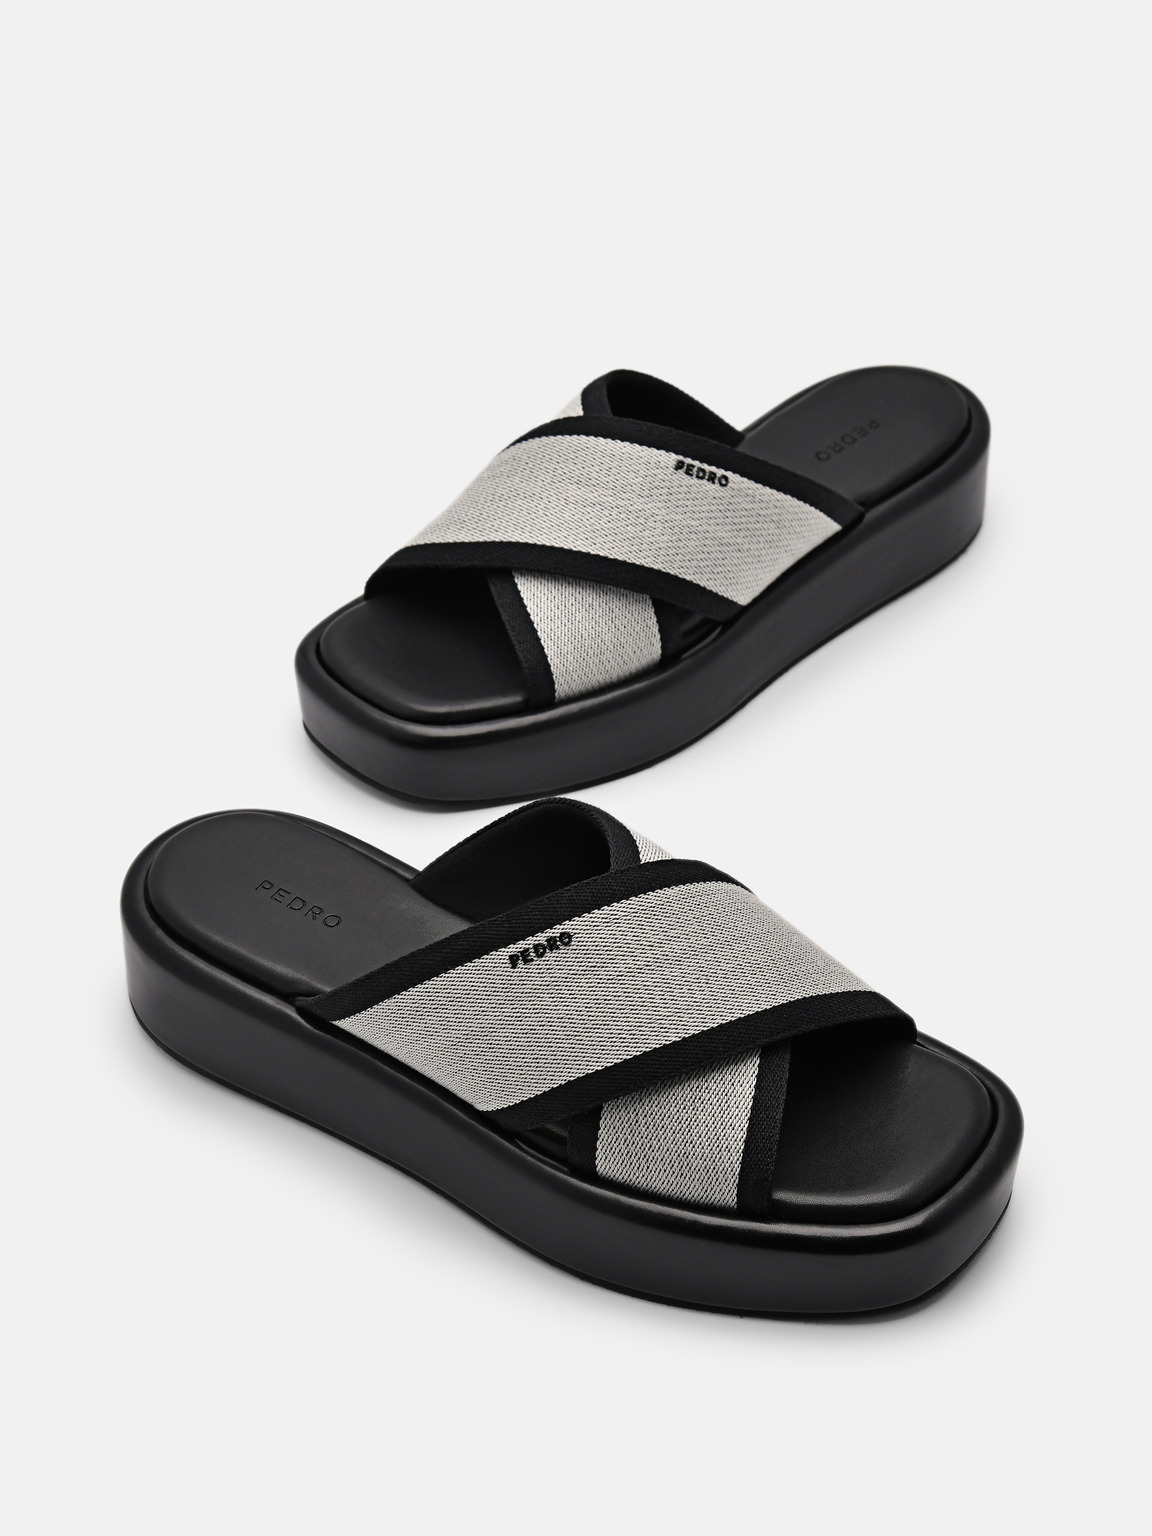 Izzie Wedge Sandals, Black